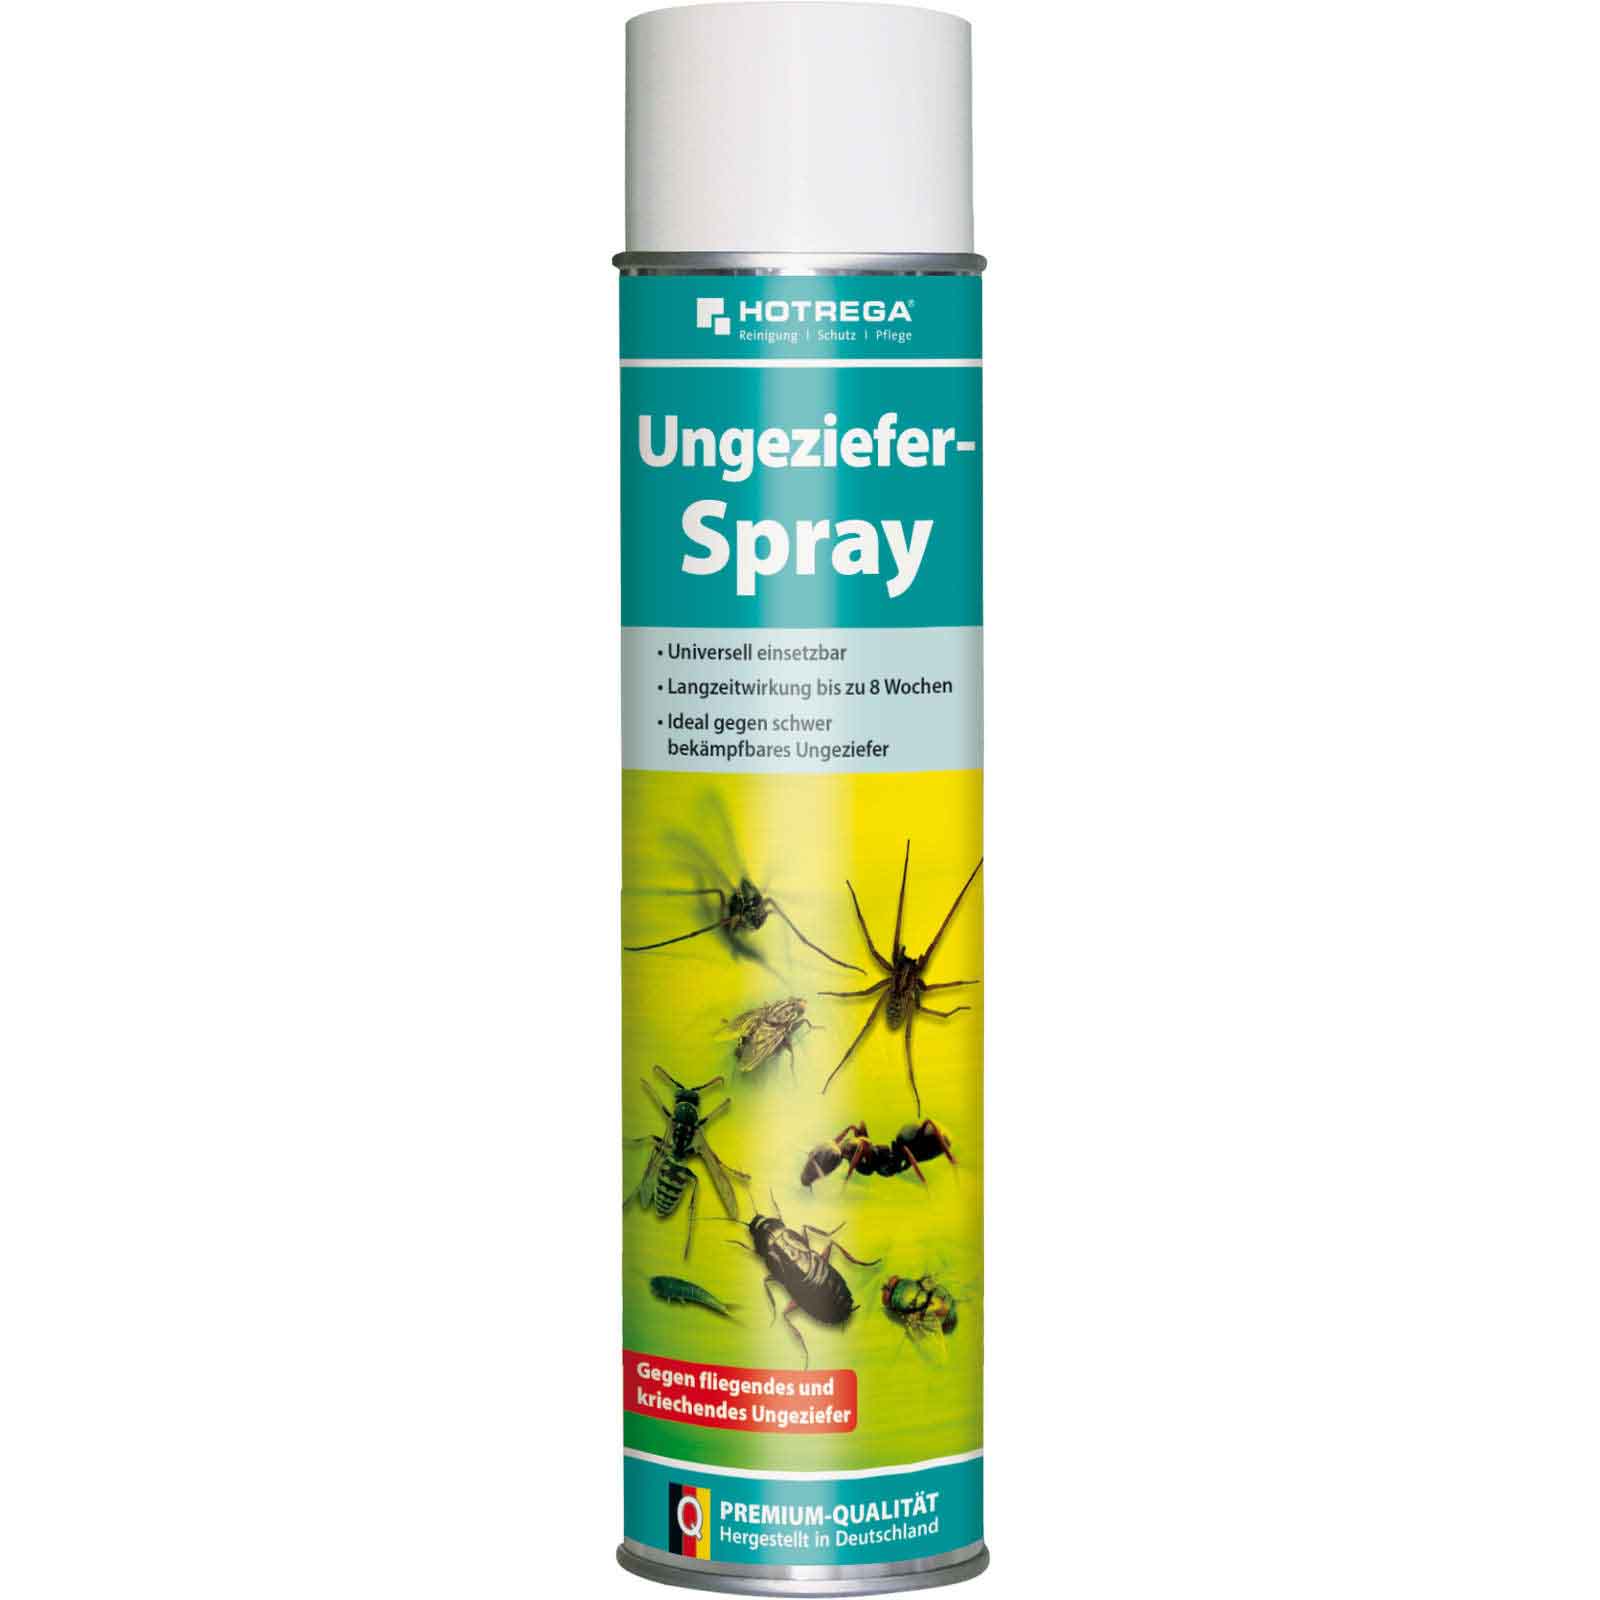 HOTREGA Ungeziefer Spray Insekten Spray Mücken Insektenvernichter Spray  600 ml von HOTREGA